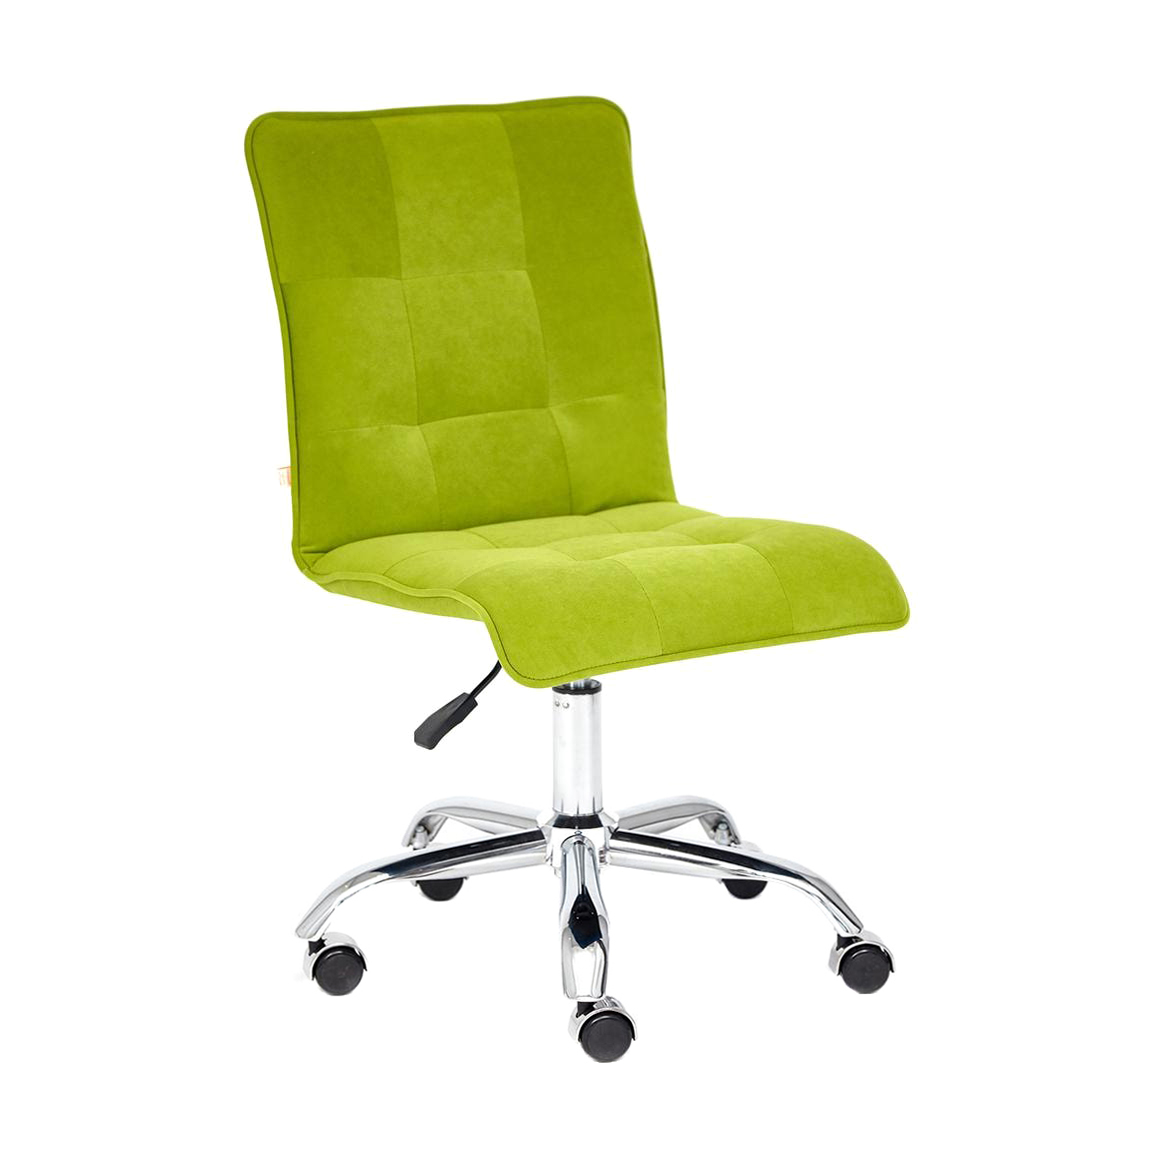 Кресло офисное TC до 100 кг 96х45х40 см оливковый кресло офисное tc до 100 кг 96х45х40 см оливковый